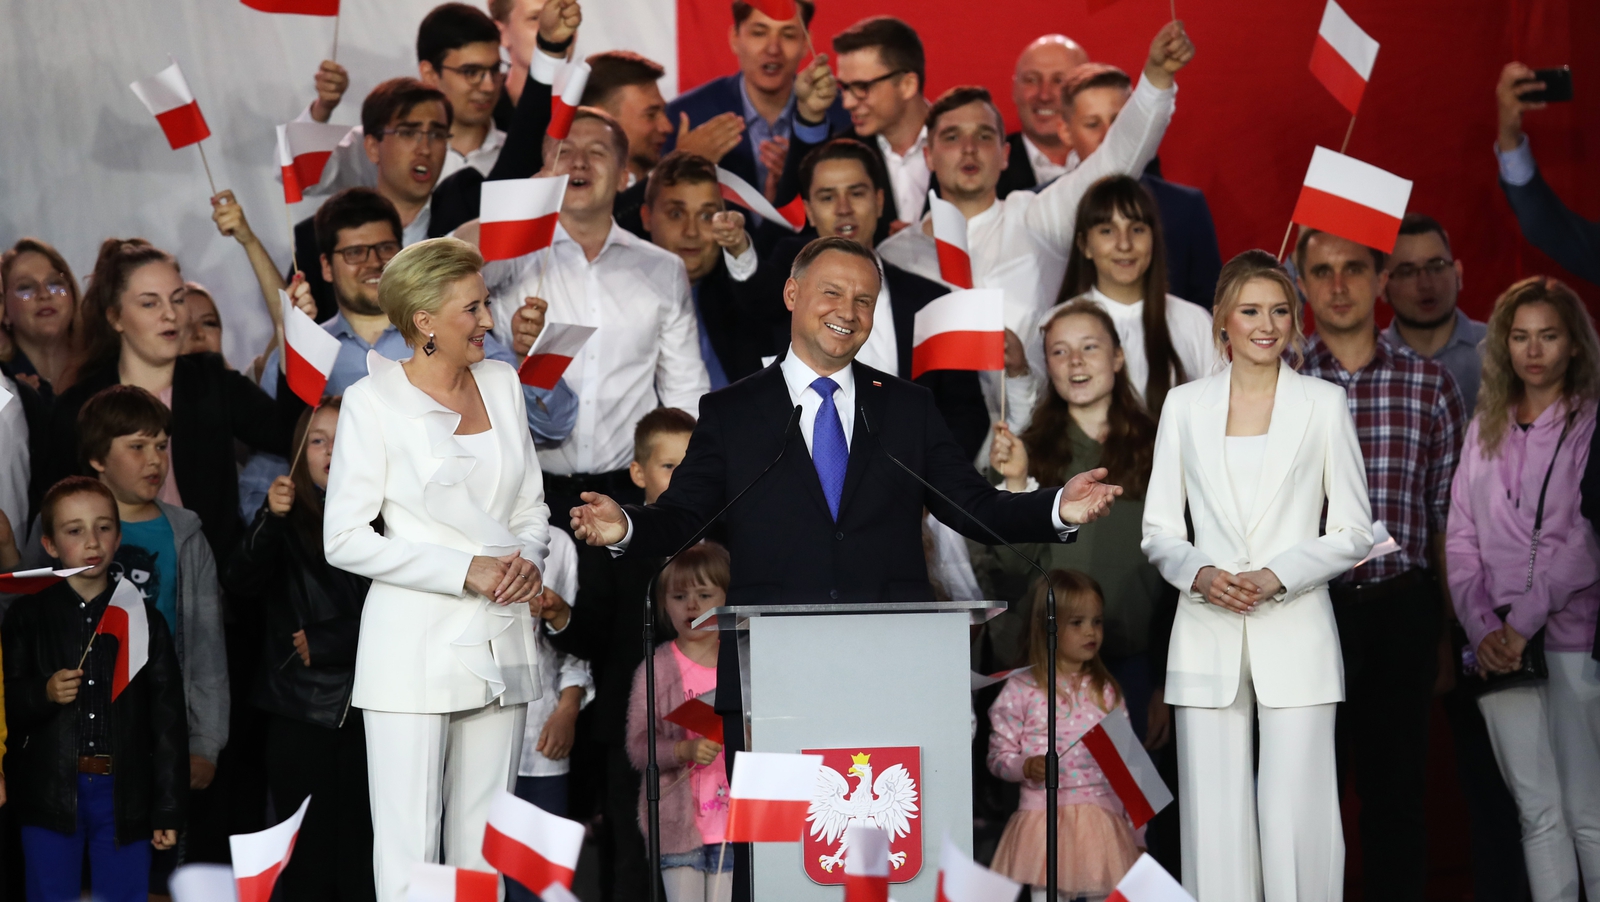 Poland's incumbent Duda wins presidential election